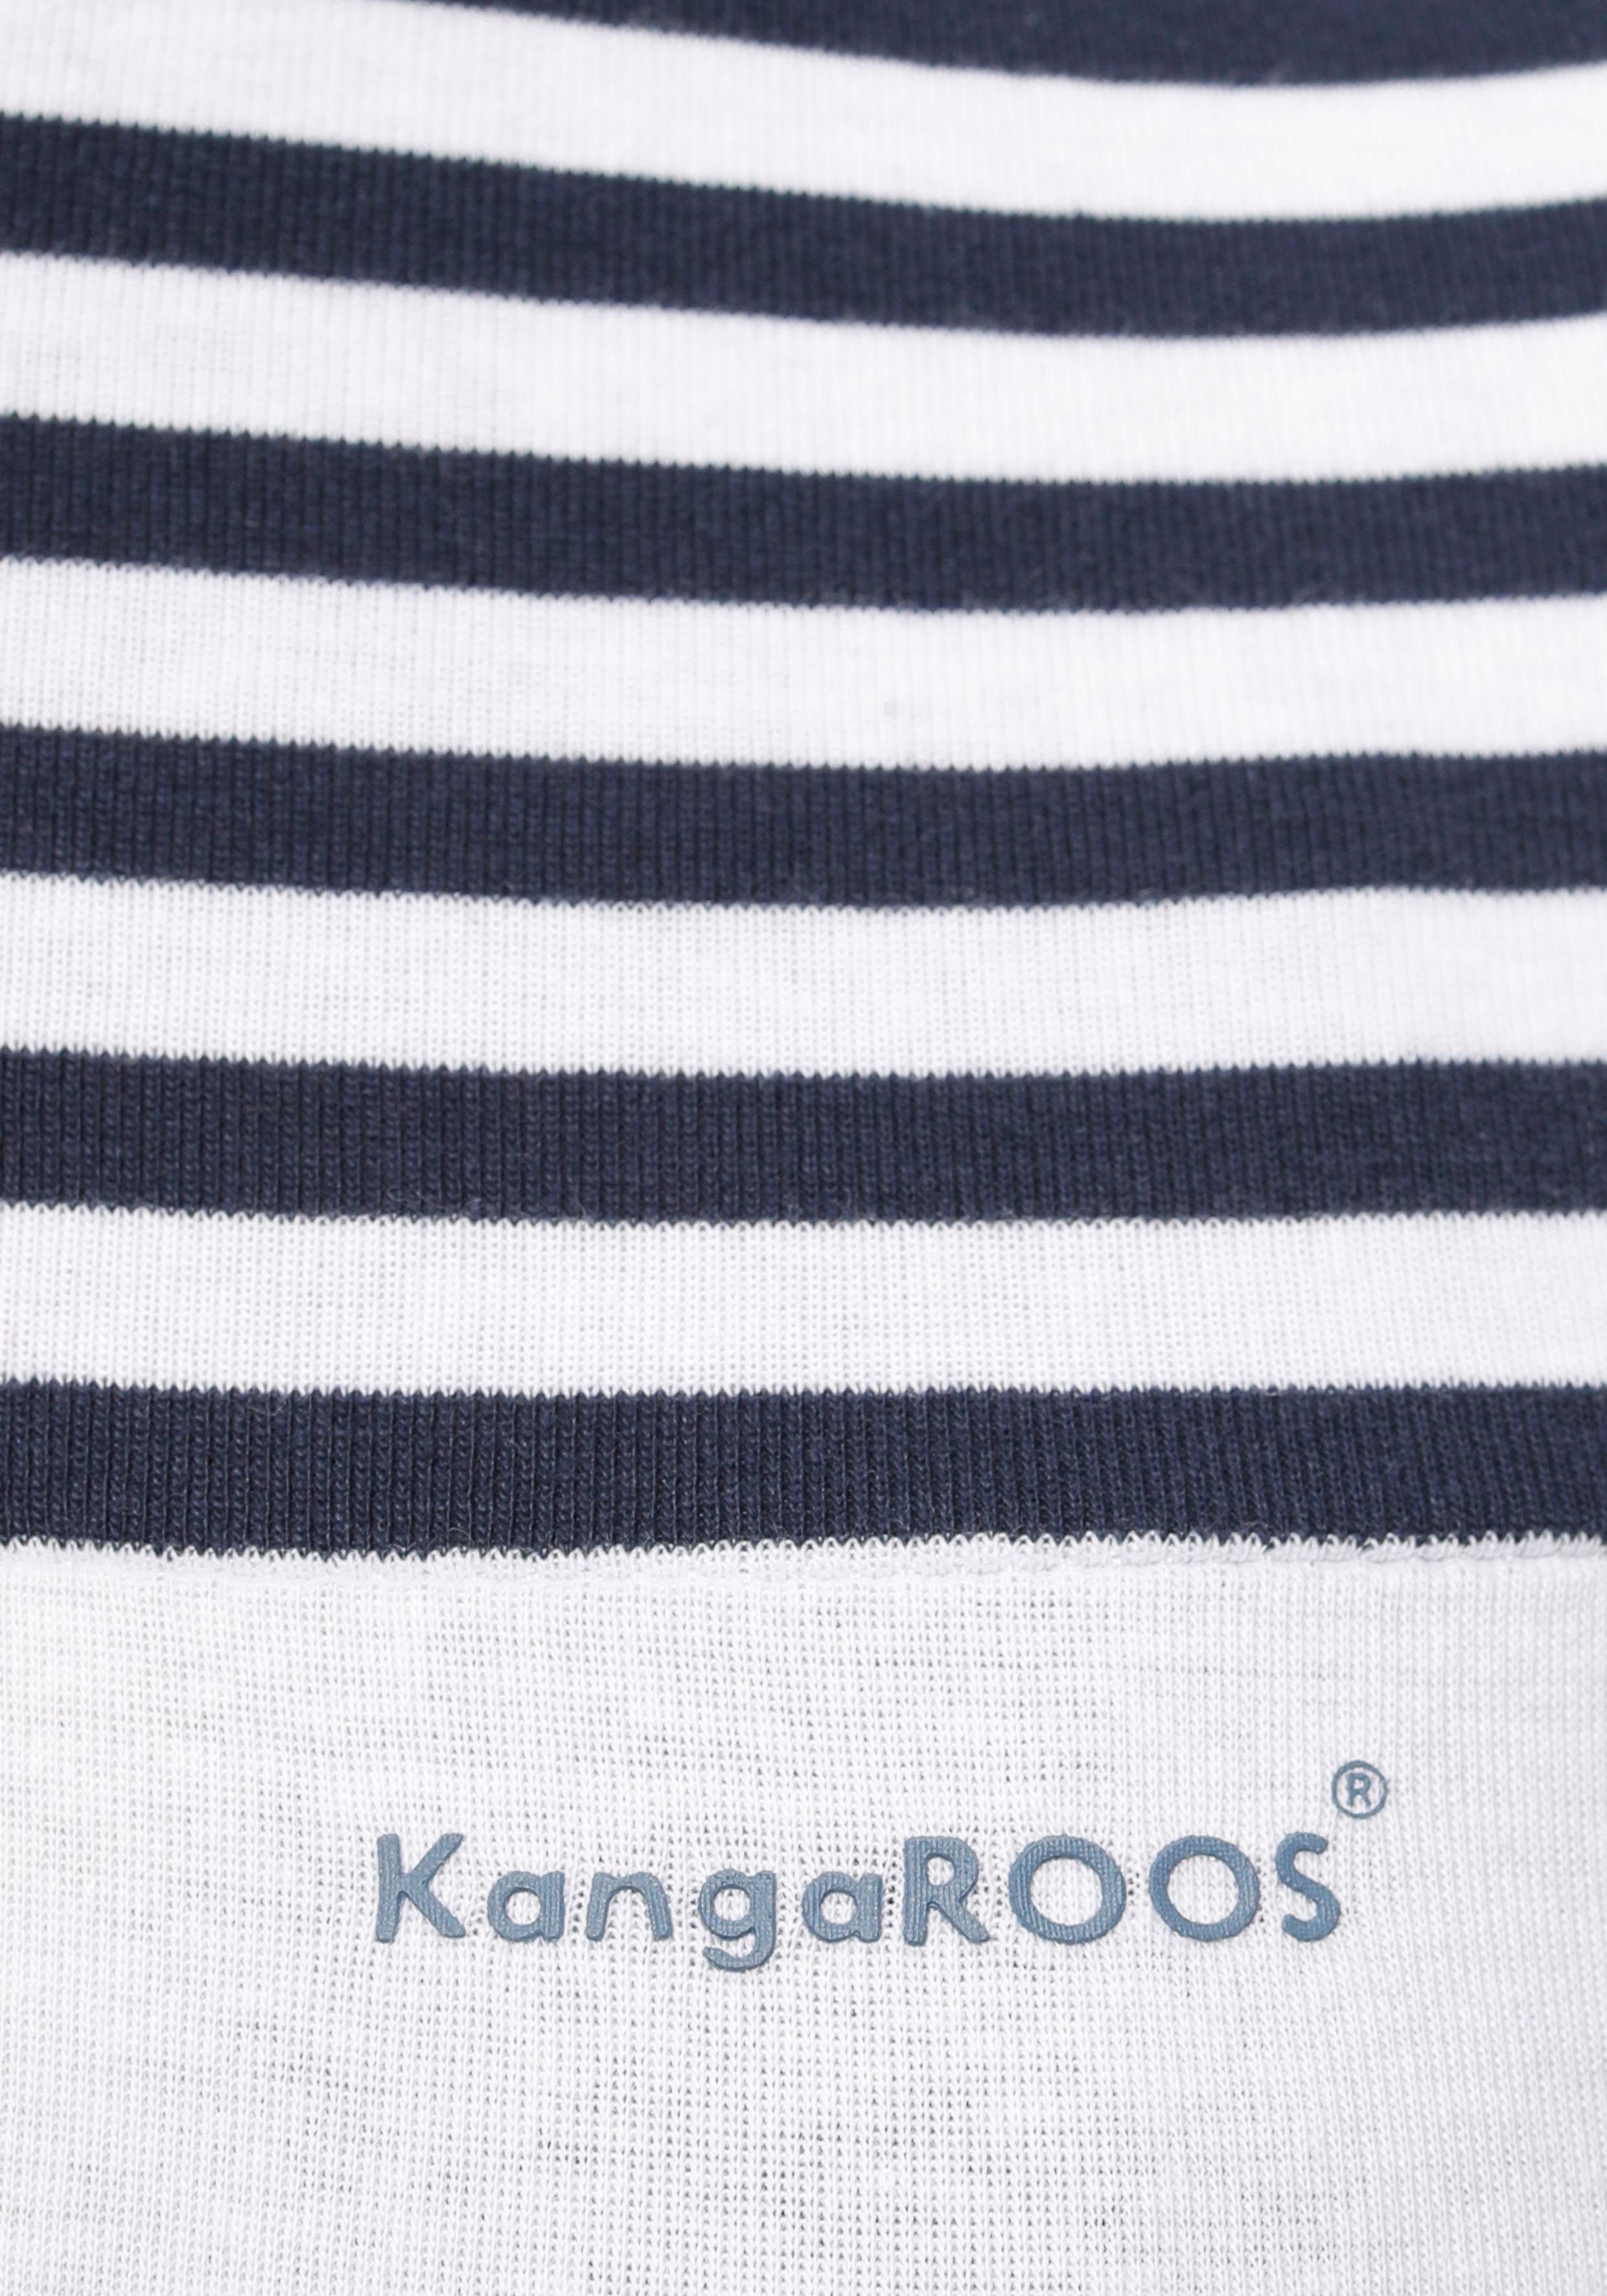 in Ringel-Optik verspielter mit Colorblocking Kapuzenshirt weiß-marine-rauchblau KangaROOS Design